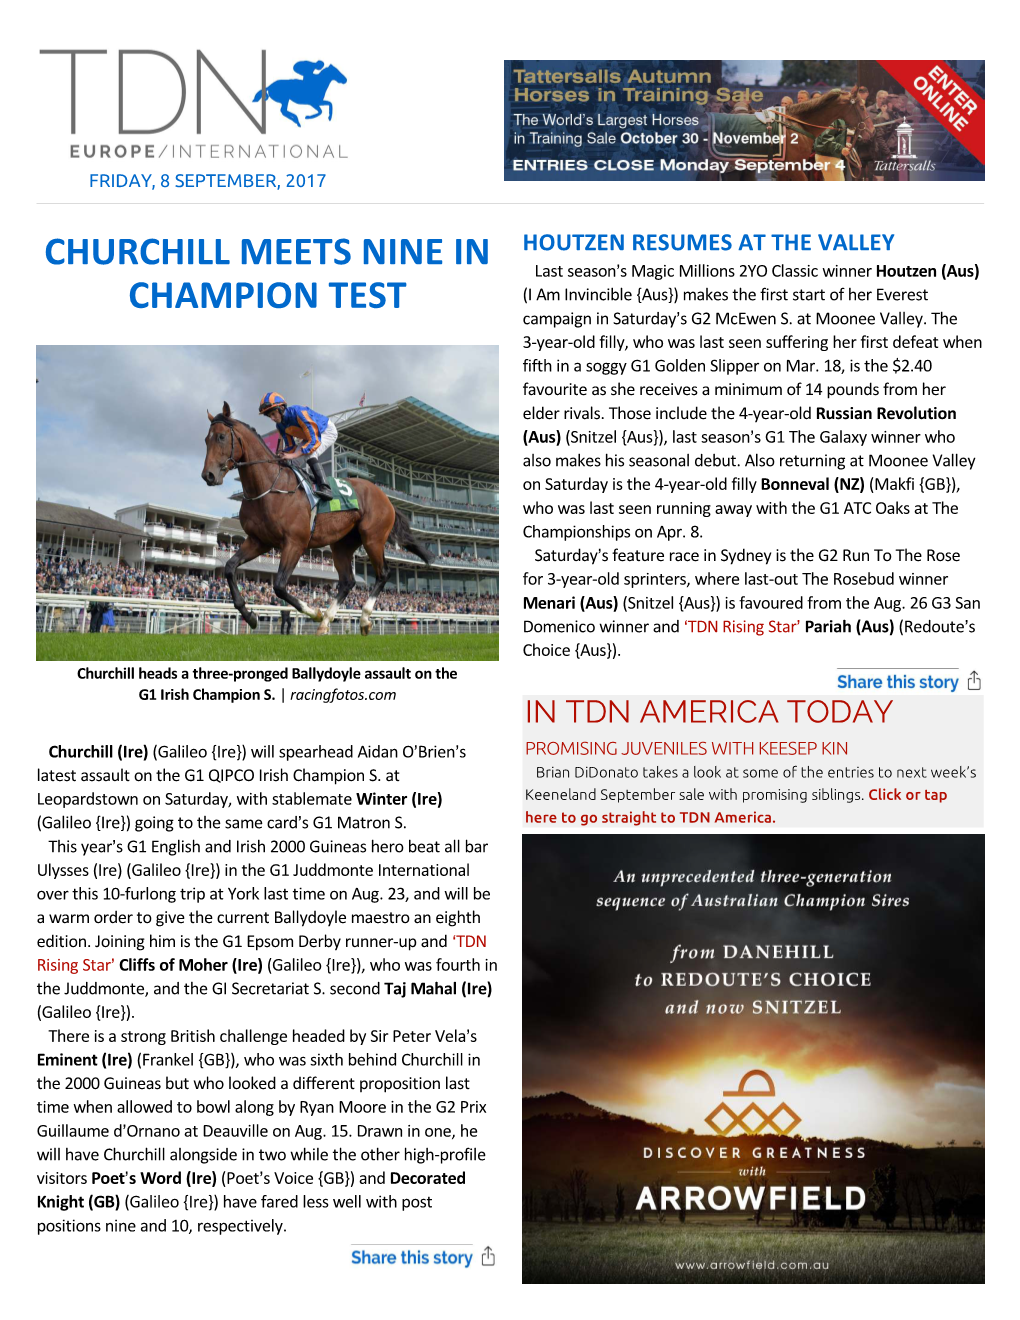 Churchill Meets Nine in Champion Test